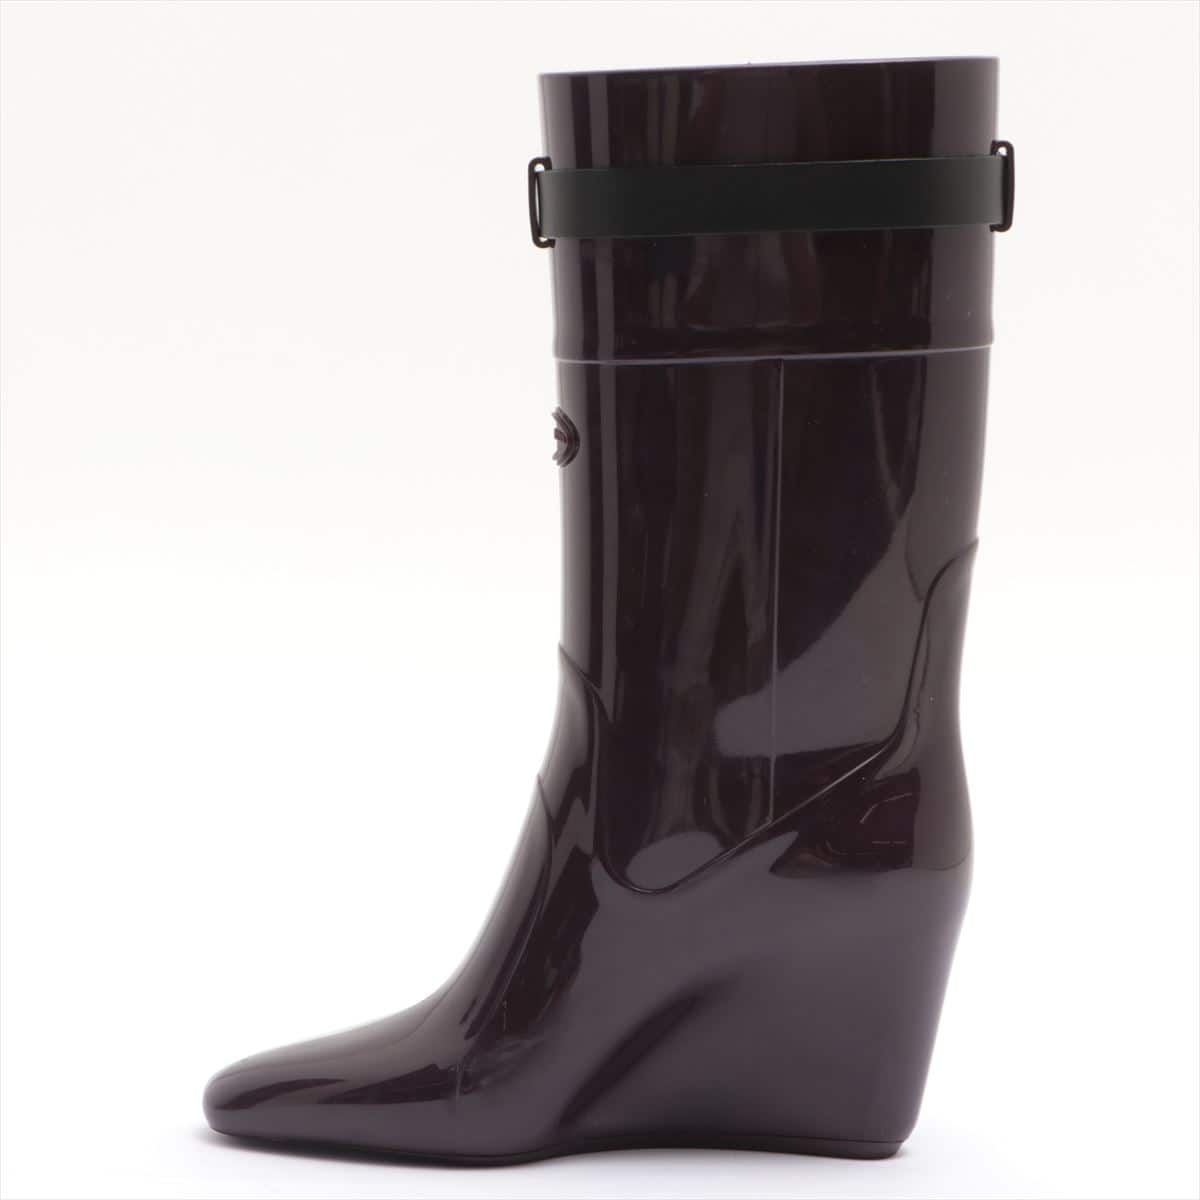 Sergio Rossi Rubber Rain boots 35 Ladies' Bordeaux